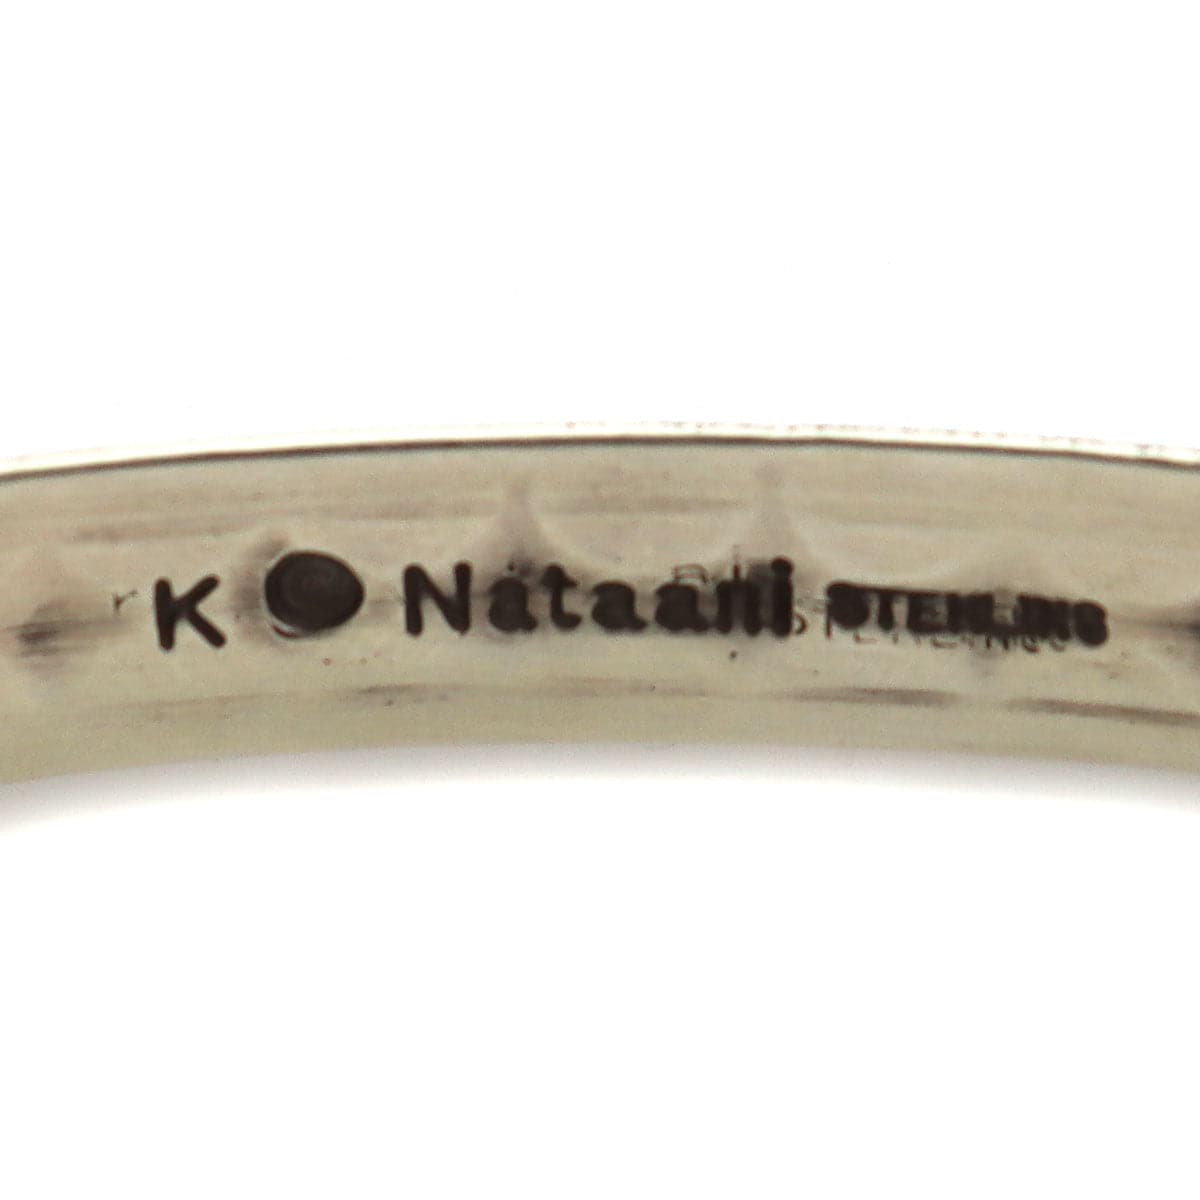 Kee (Karl) Nataani â€“ Navajo Sterling Silver Stamped Design Bracelet, Contemporary (J14184-007)5